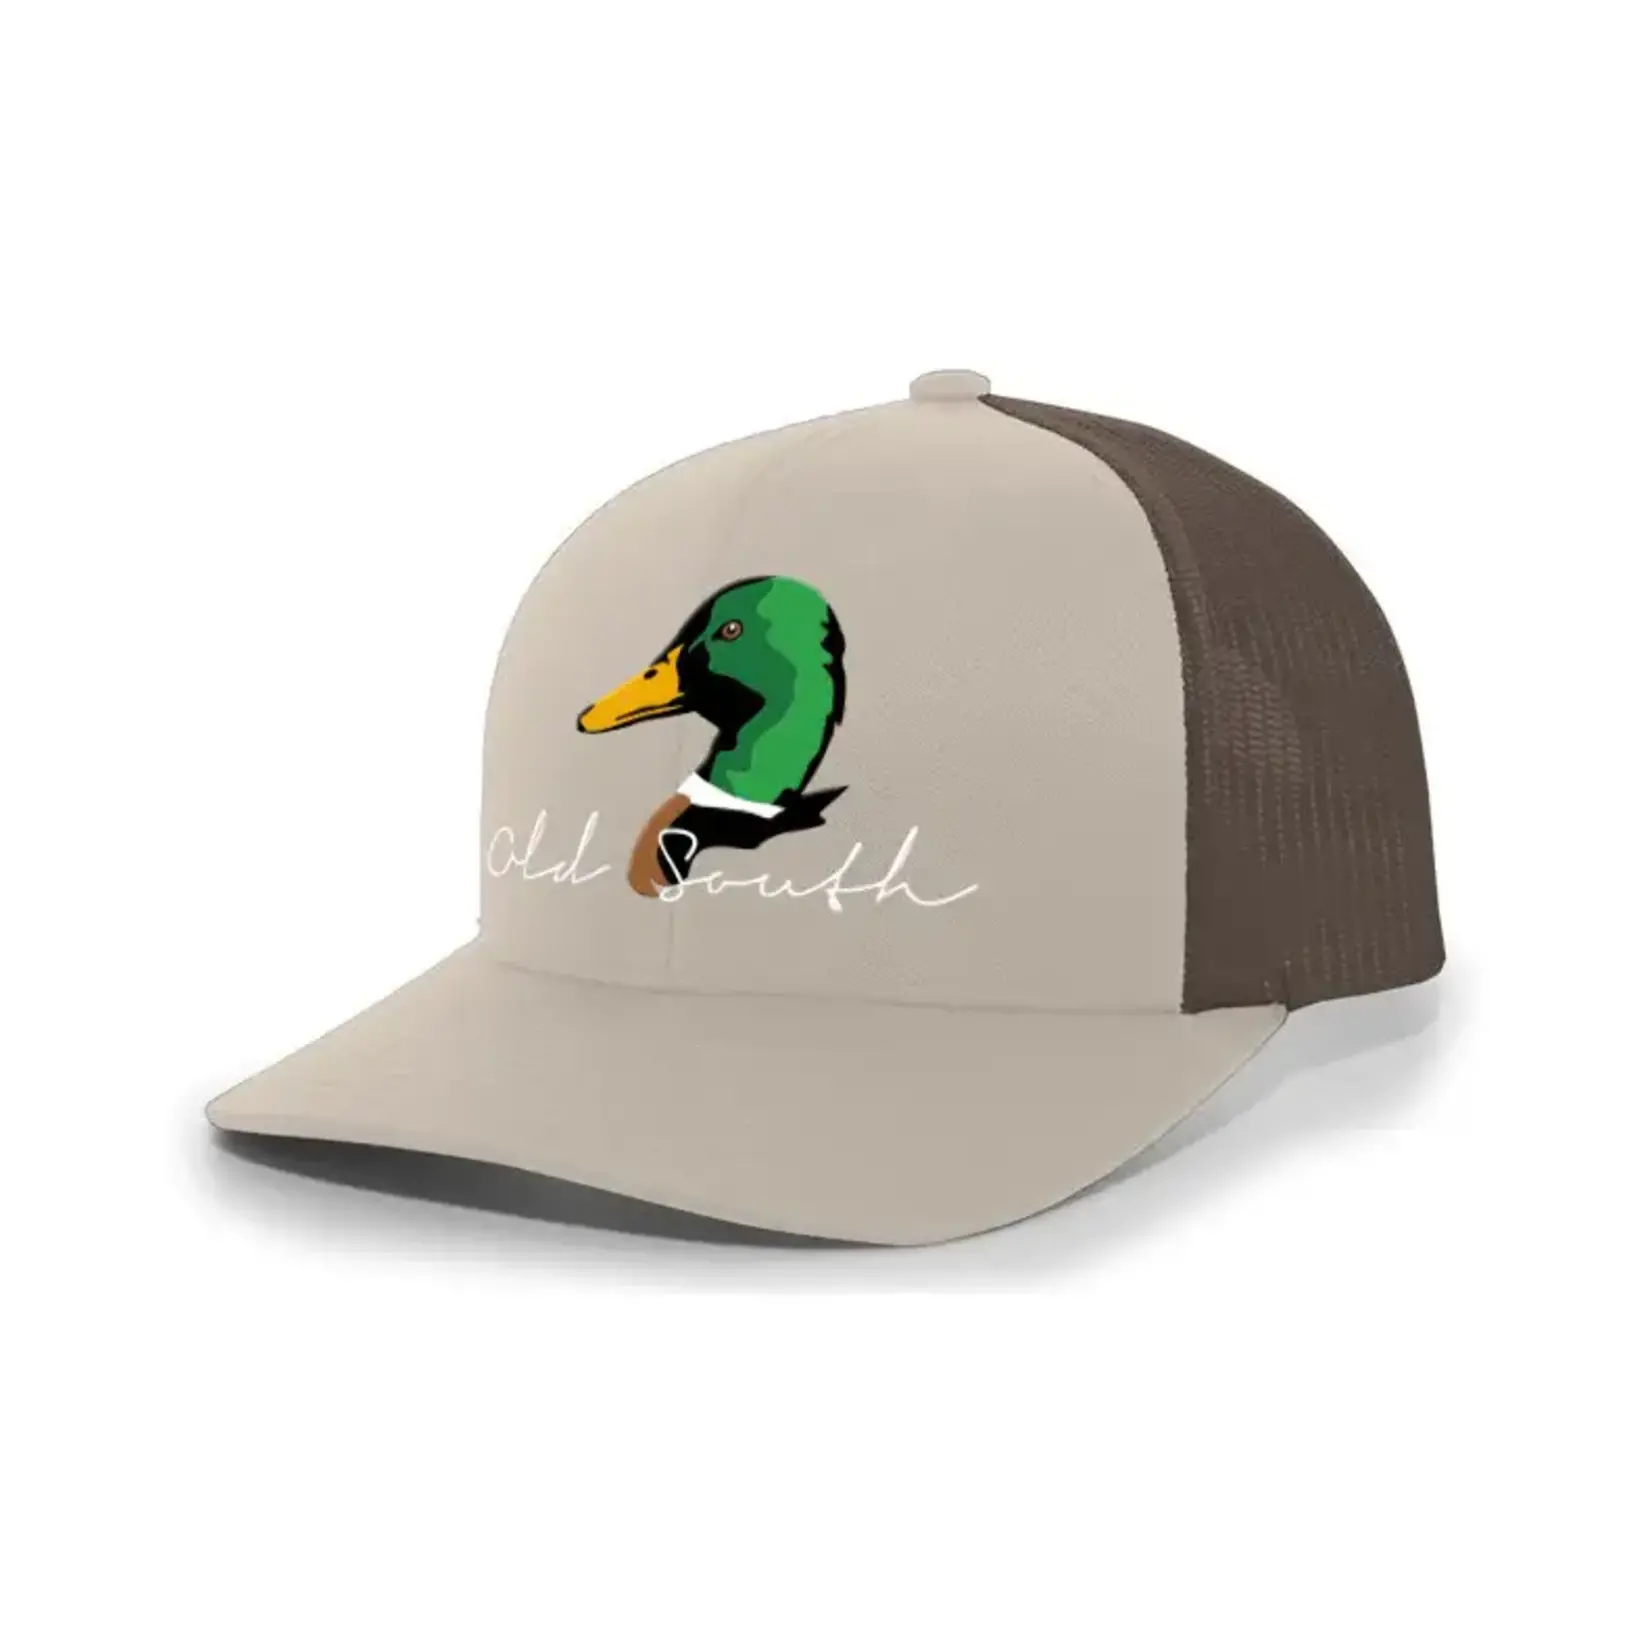 Old South Apparel Old South Apparel Mallard Duck Head Snapback Hat